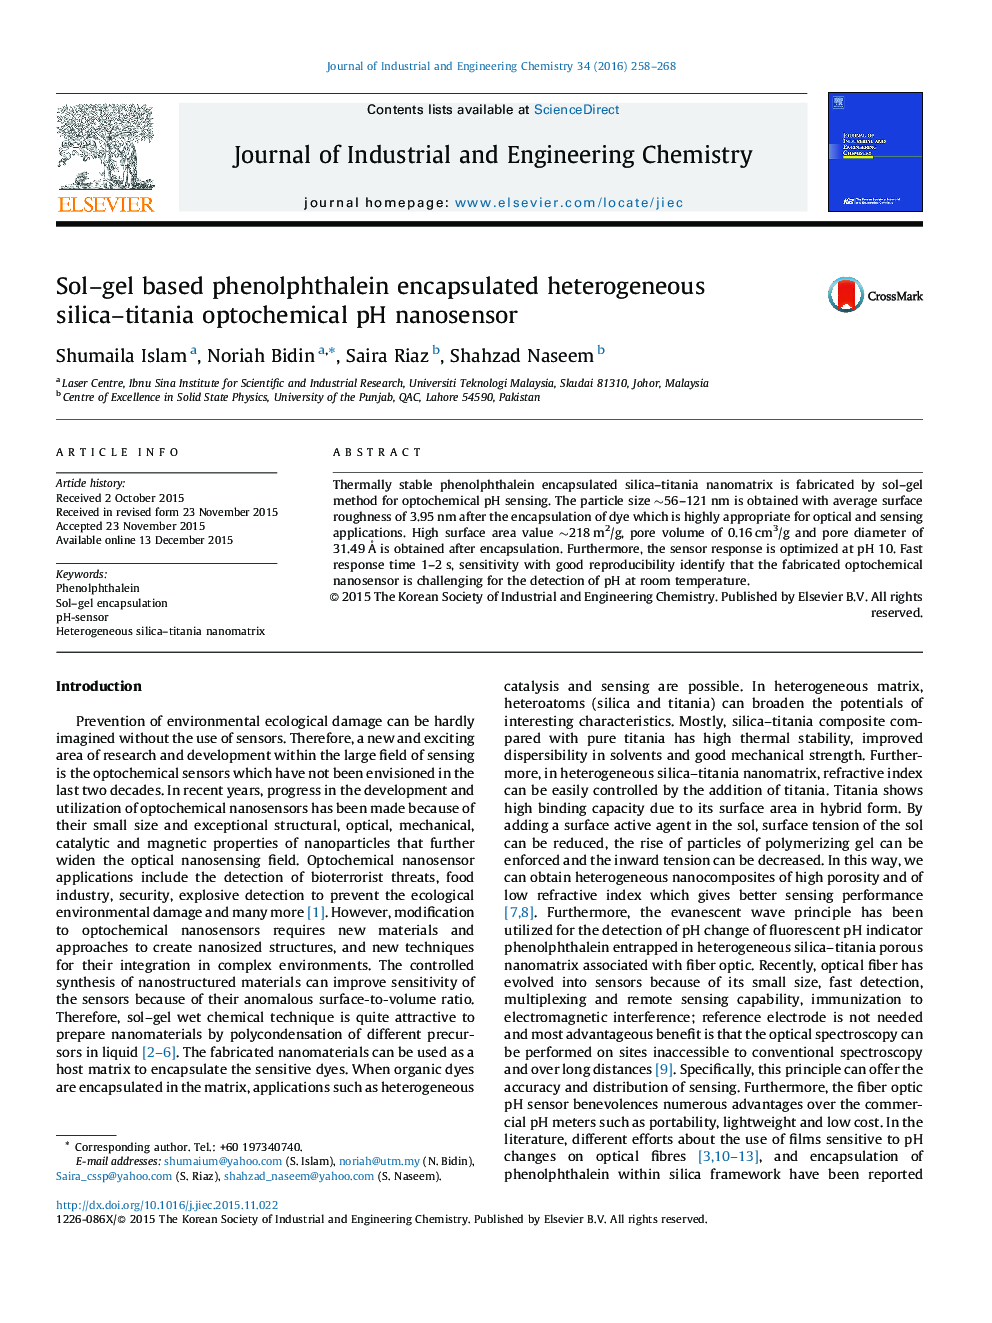 Sol–gel based phenolphthalein encapsulated heterogeneous silica–titania optochemical pH nanosensor